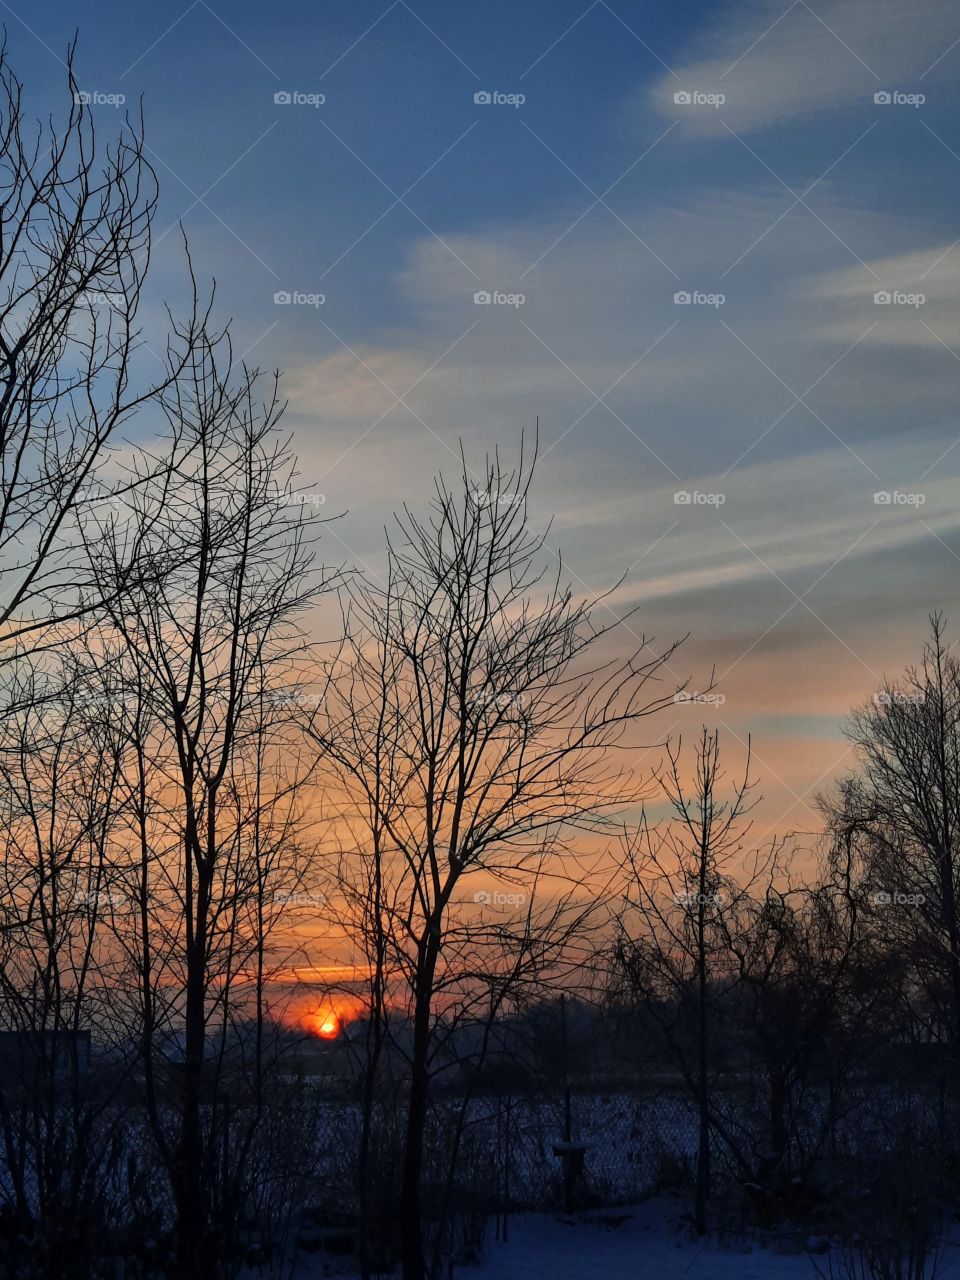 winter garden - orange sunrise with beautiful sky